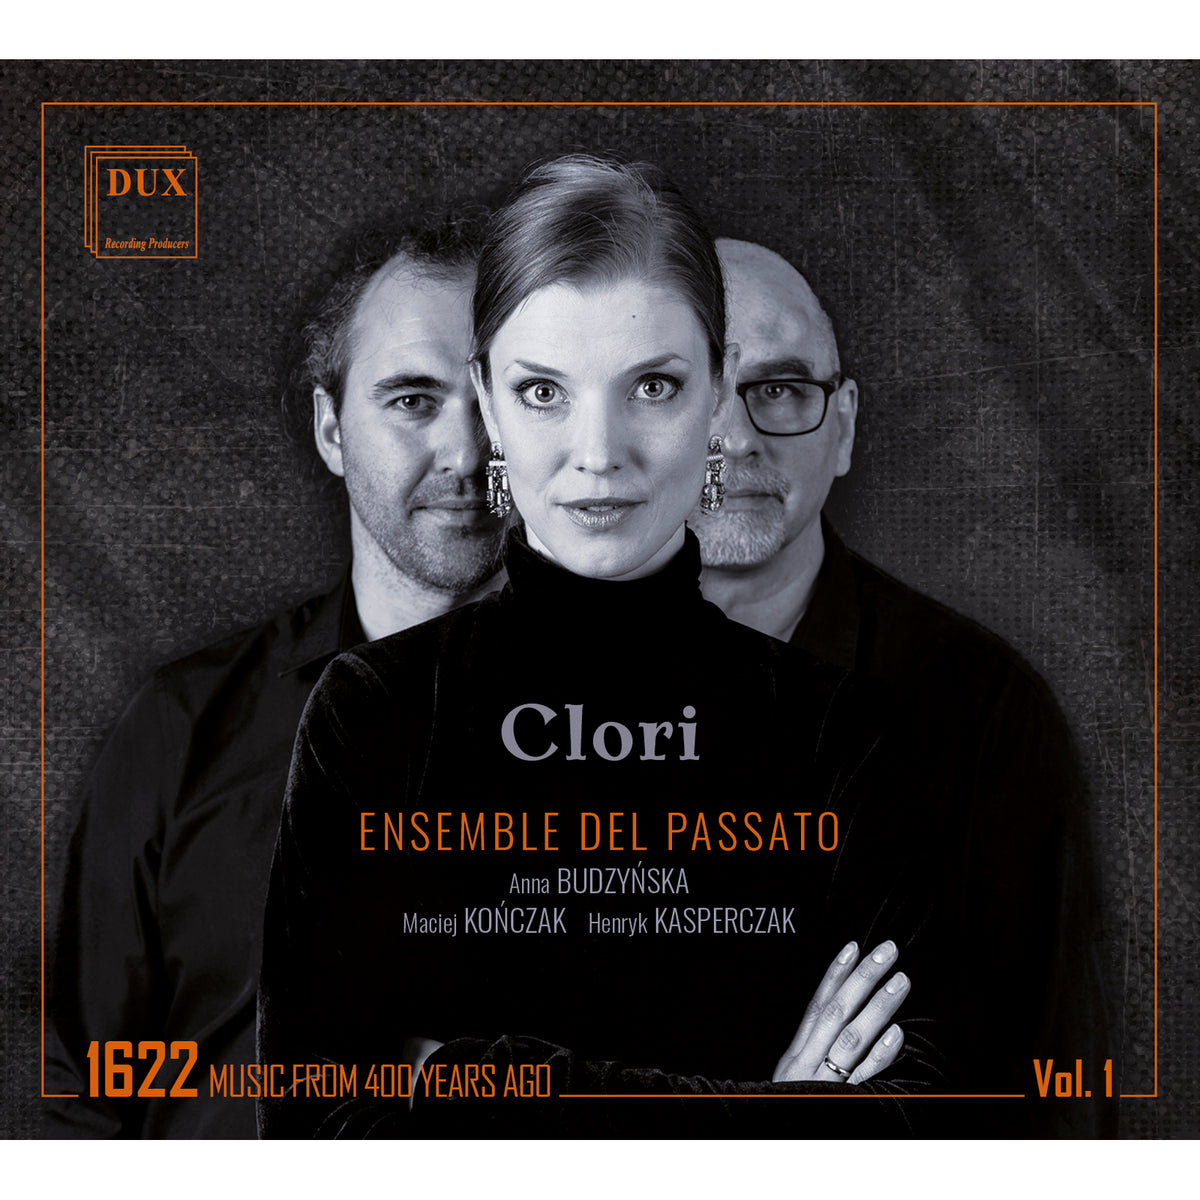 Ensemble Del Passato - Clori 1662 - Music from 400 Years ago - DUX1667